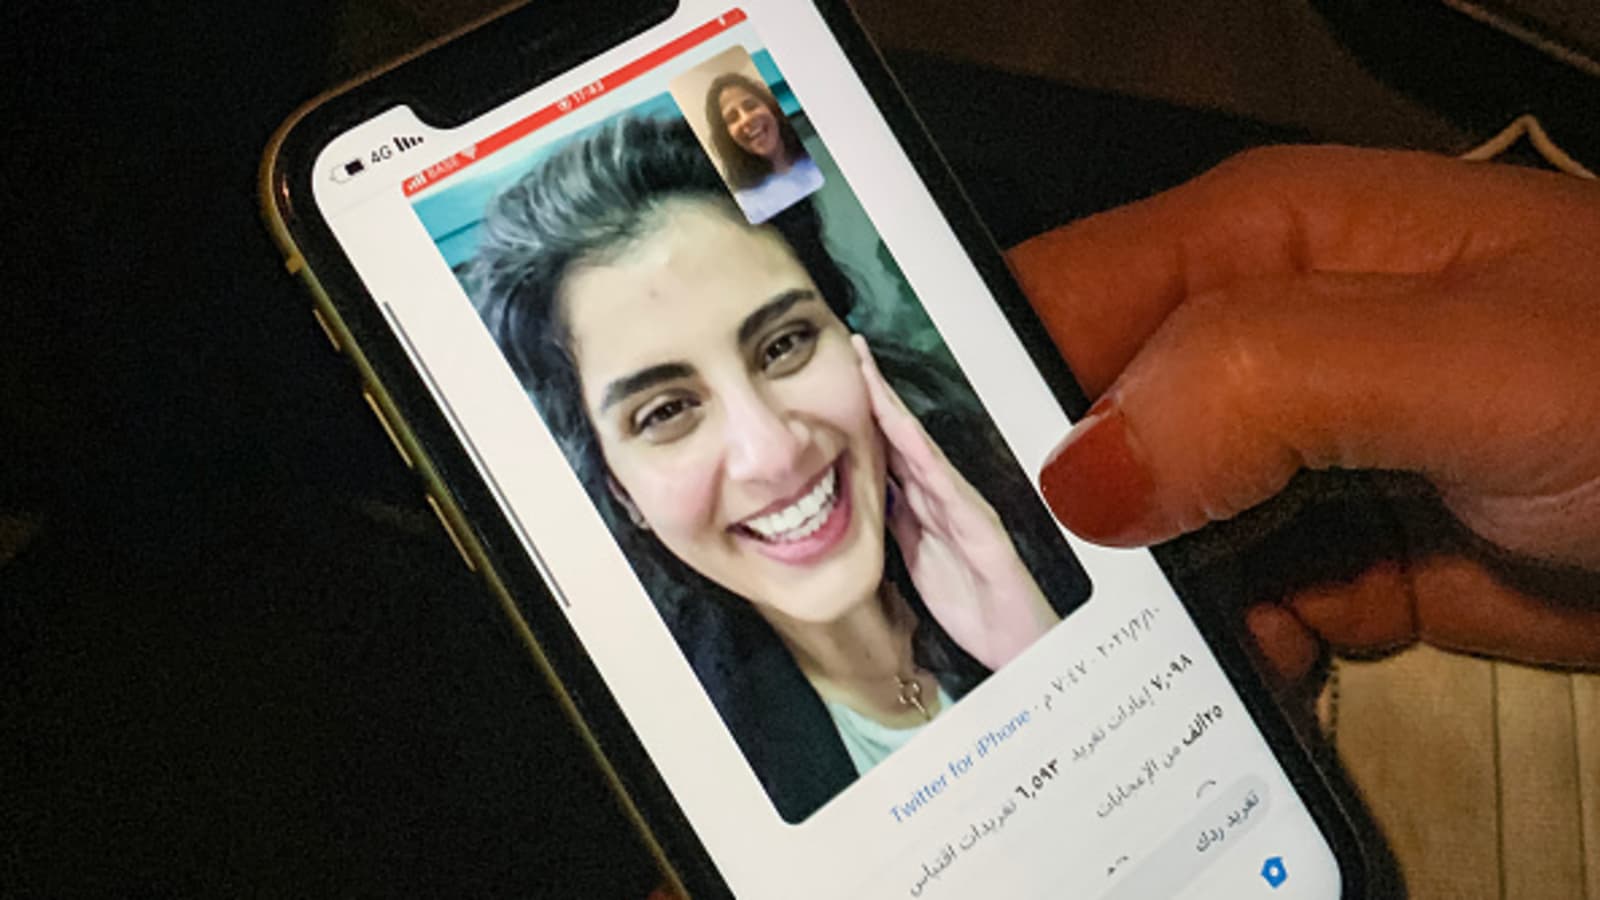 Saudi arabian woman killed for chatting on facebook